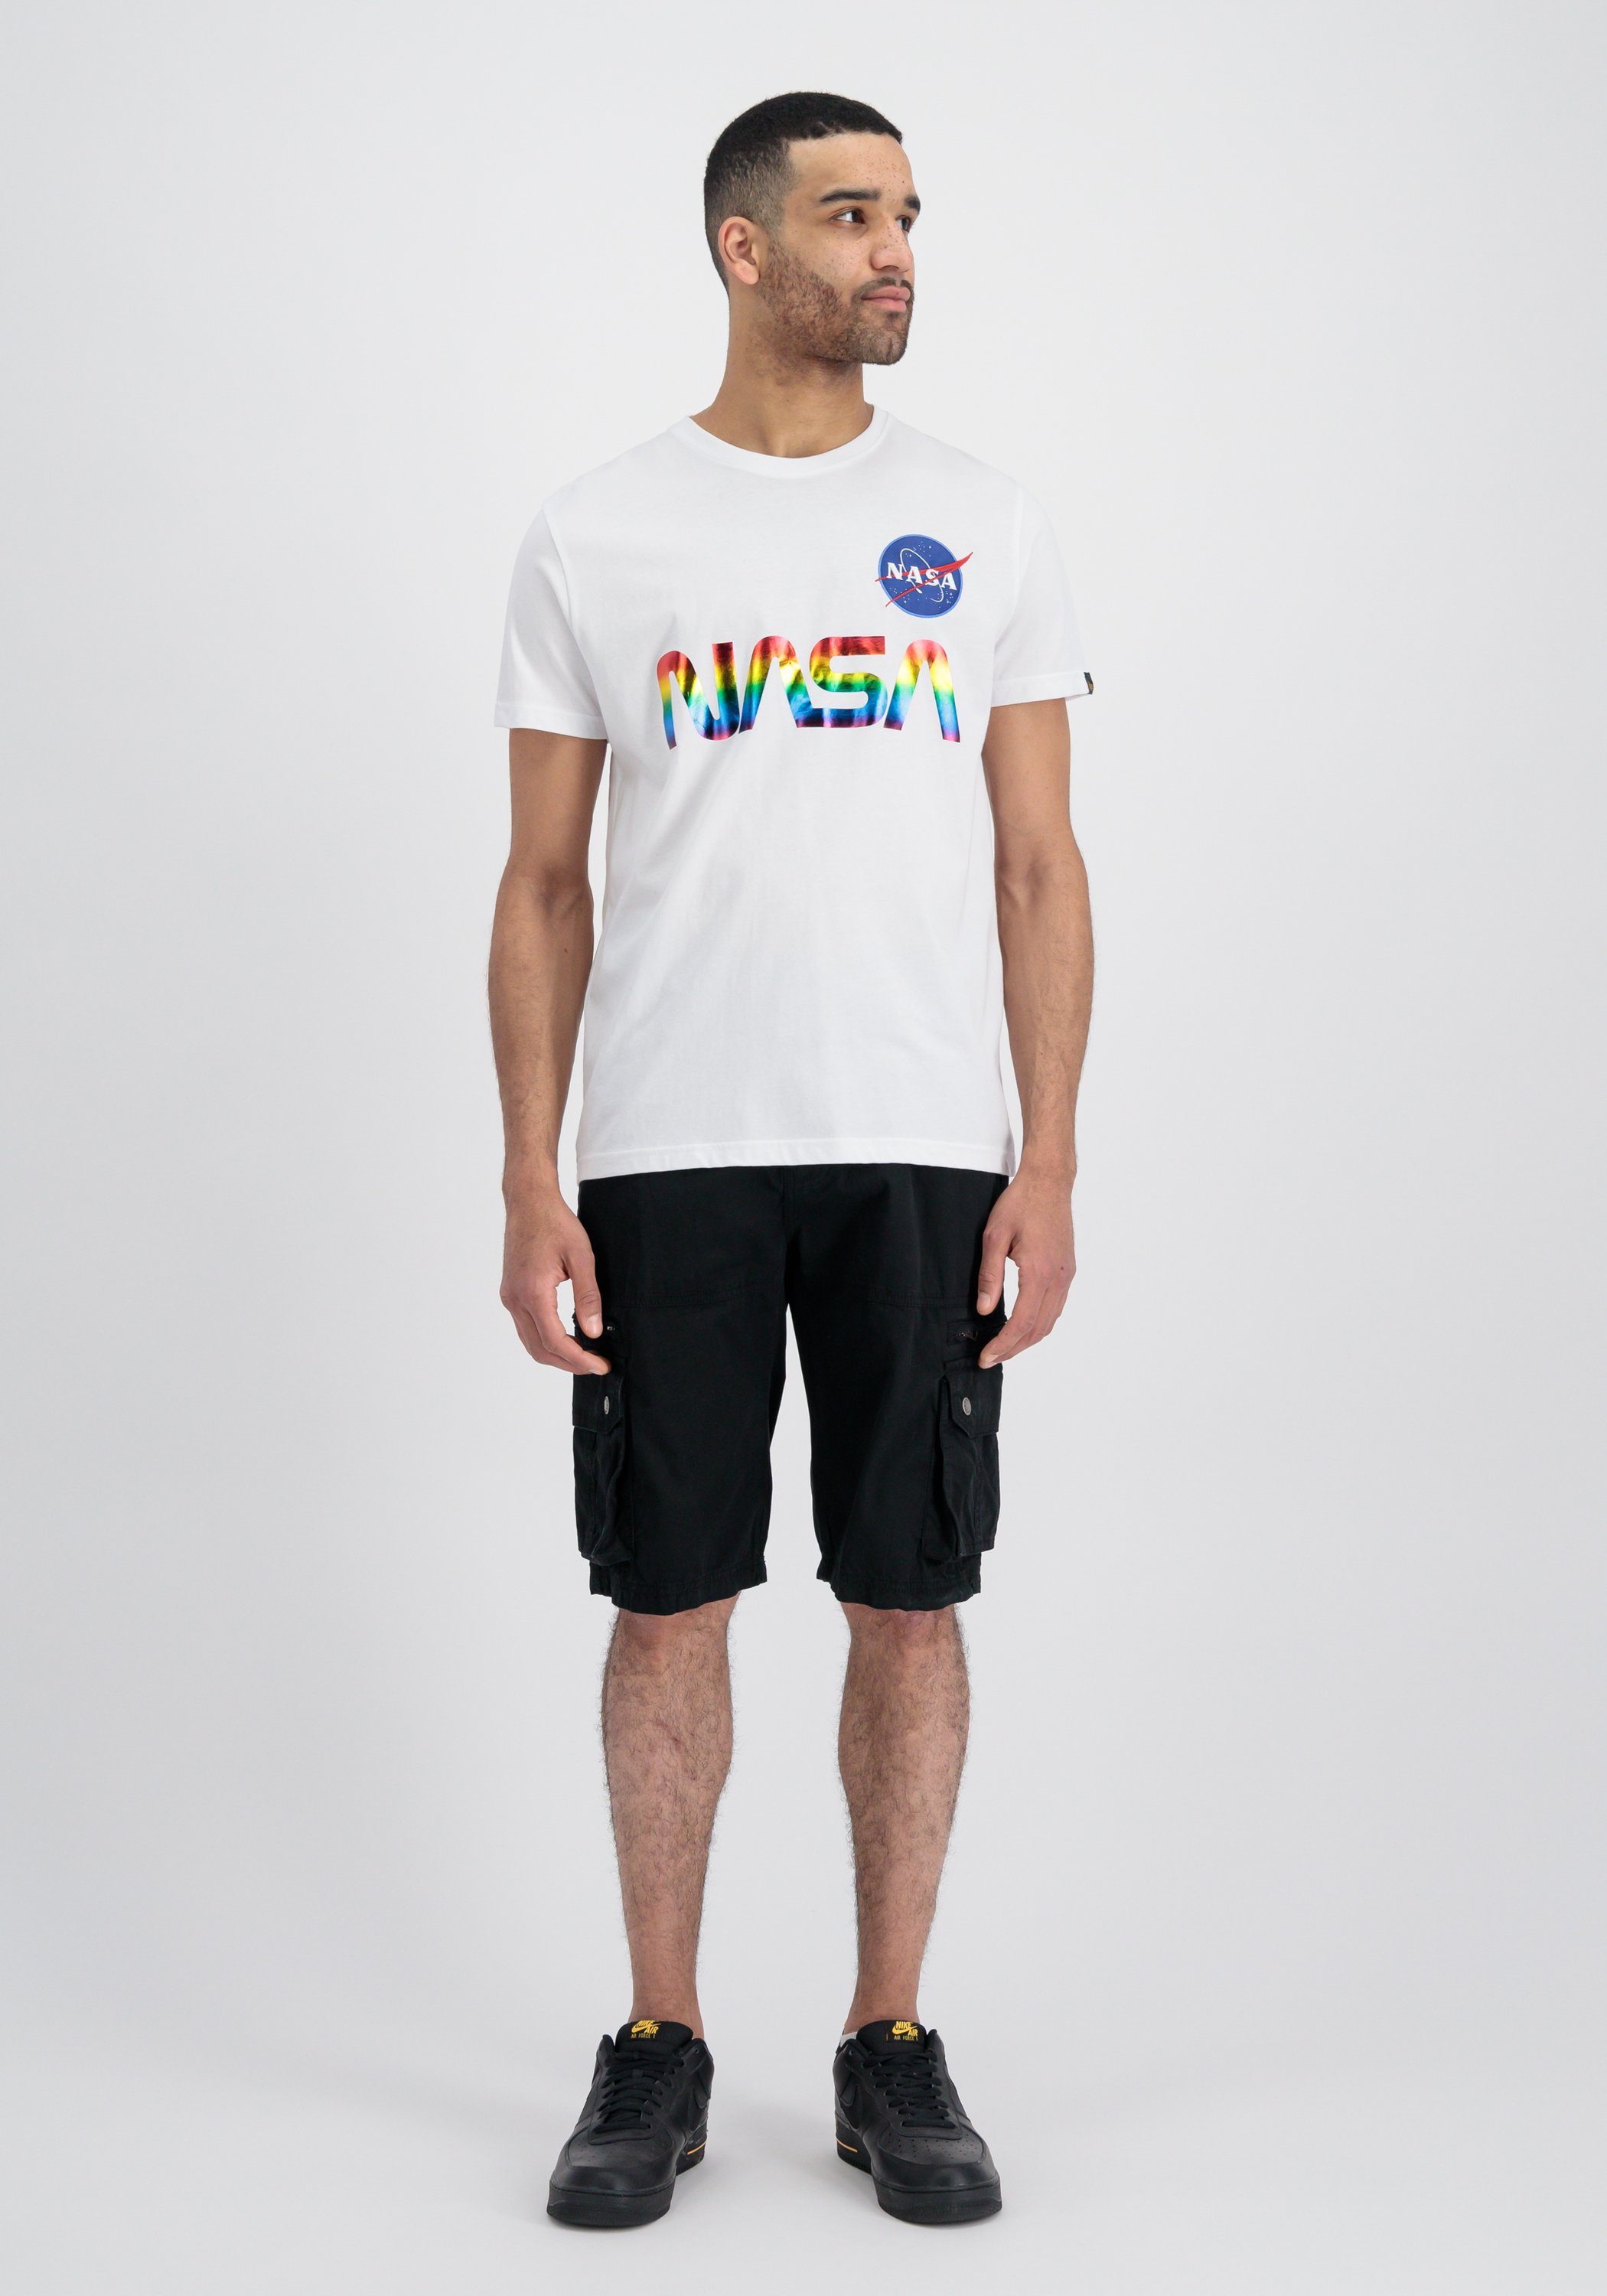 Metal de T Industries T-shirt Refl. NASA online Alpha | OTTO Alpha T-Shirts Industries Men - shop in